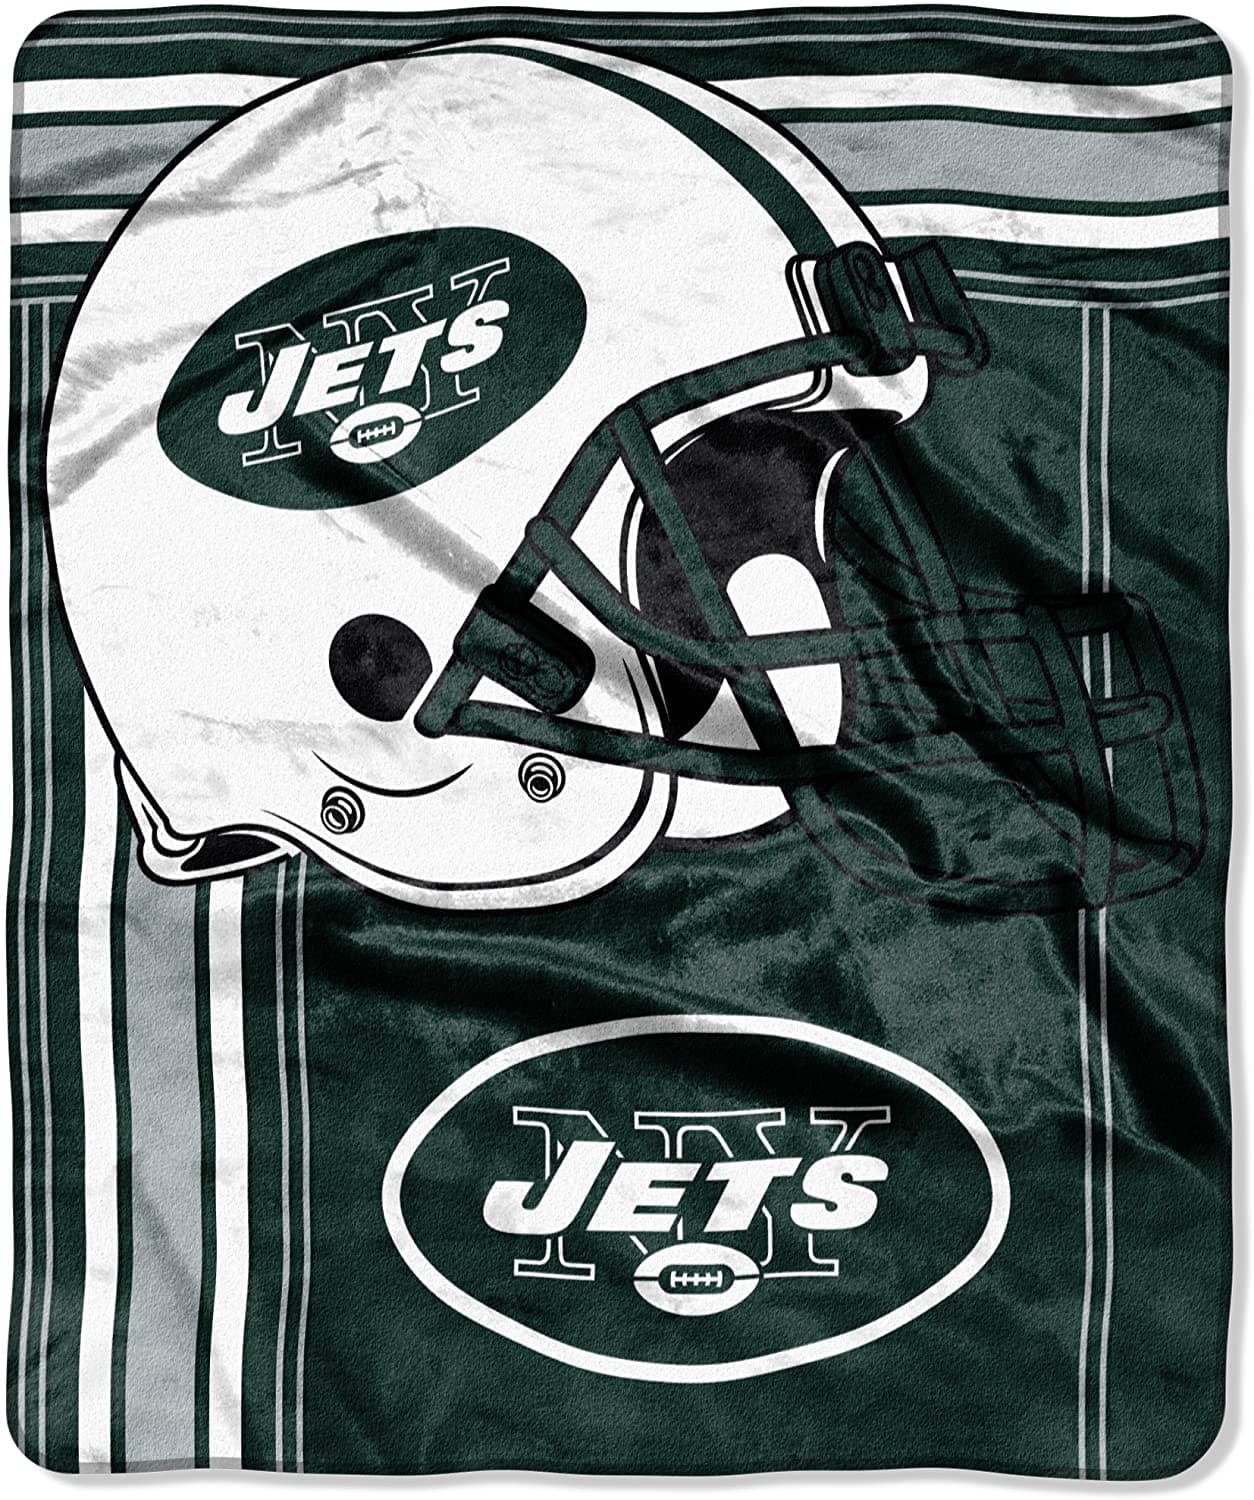 Officially Licensed Nfl Throw New York Jets Fleece Blanket